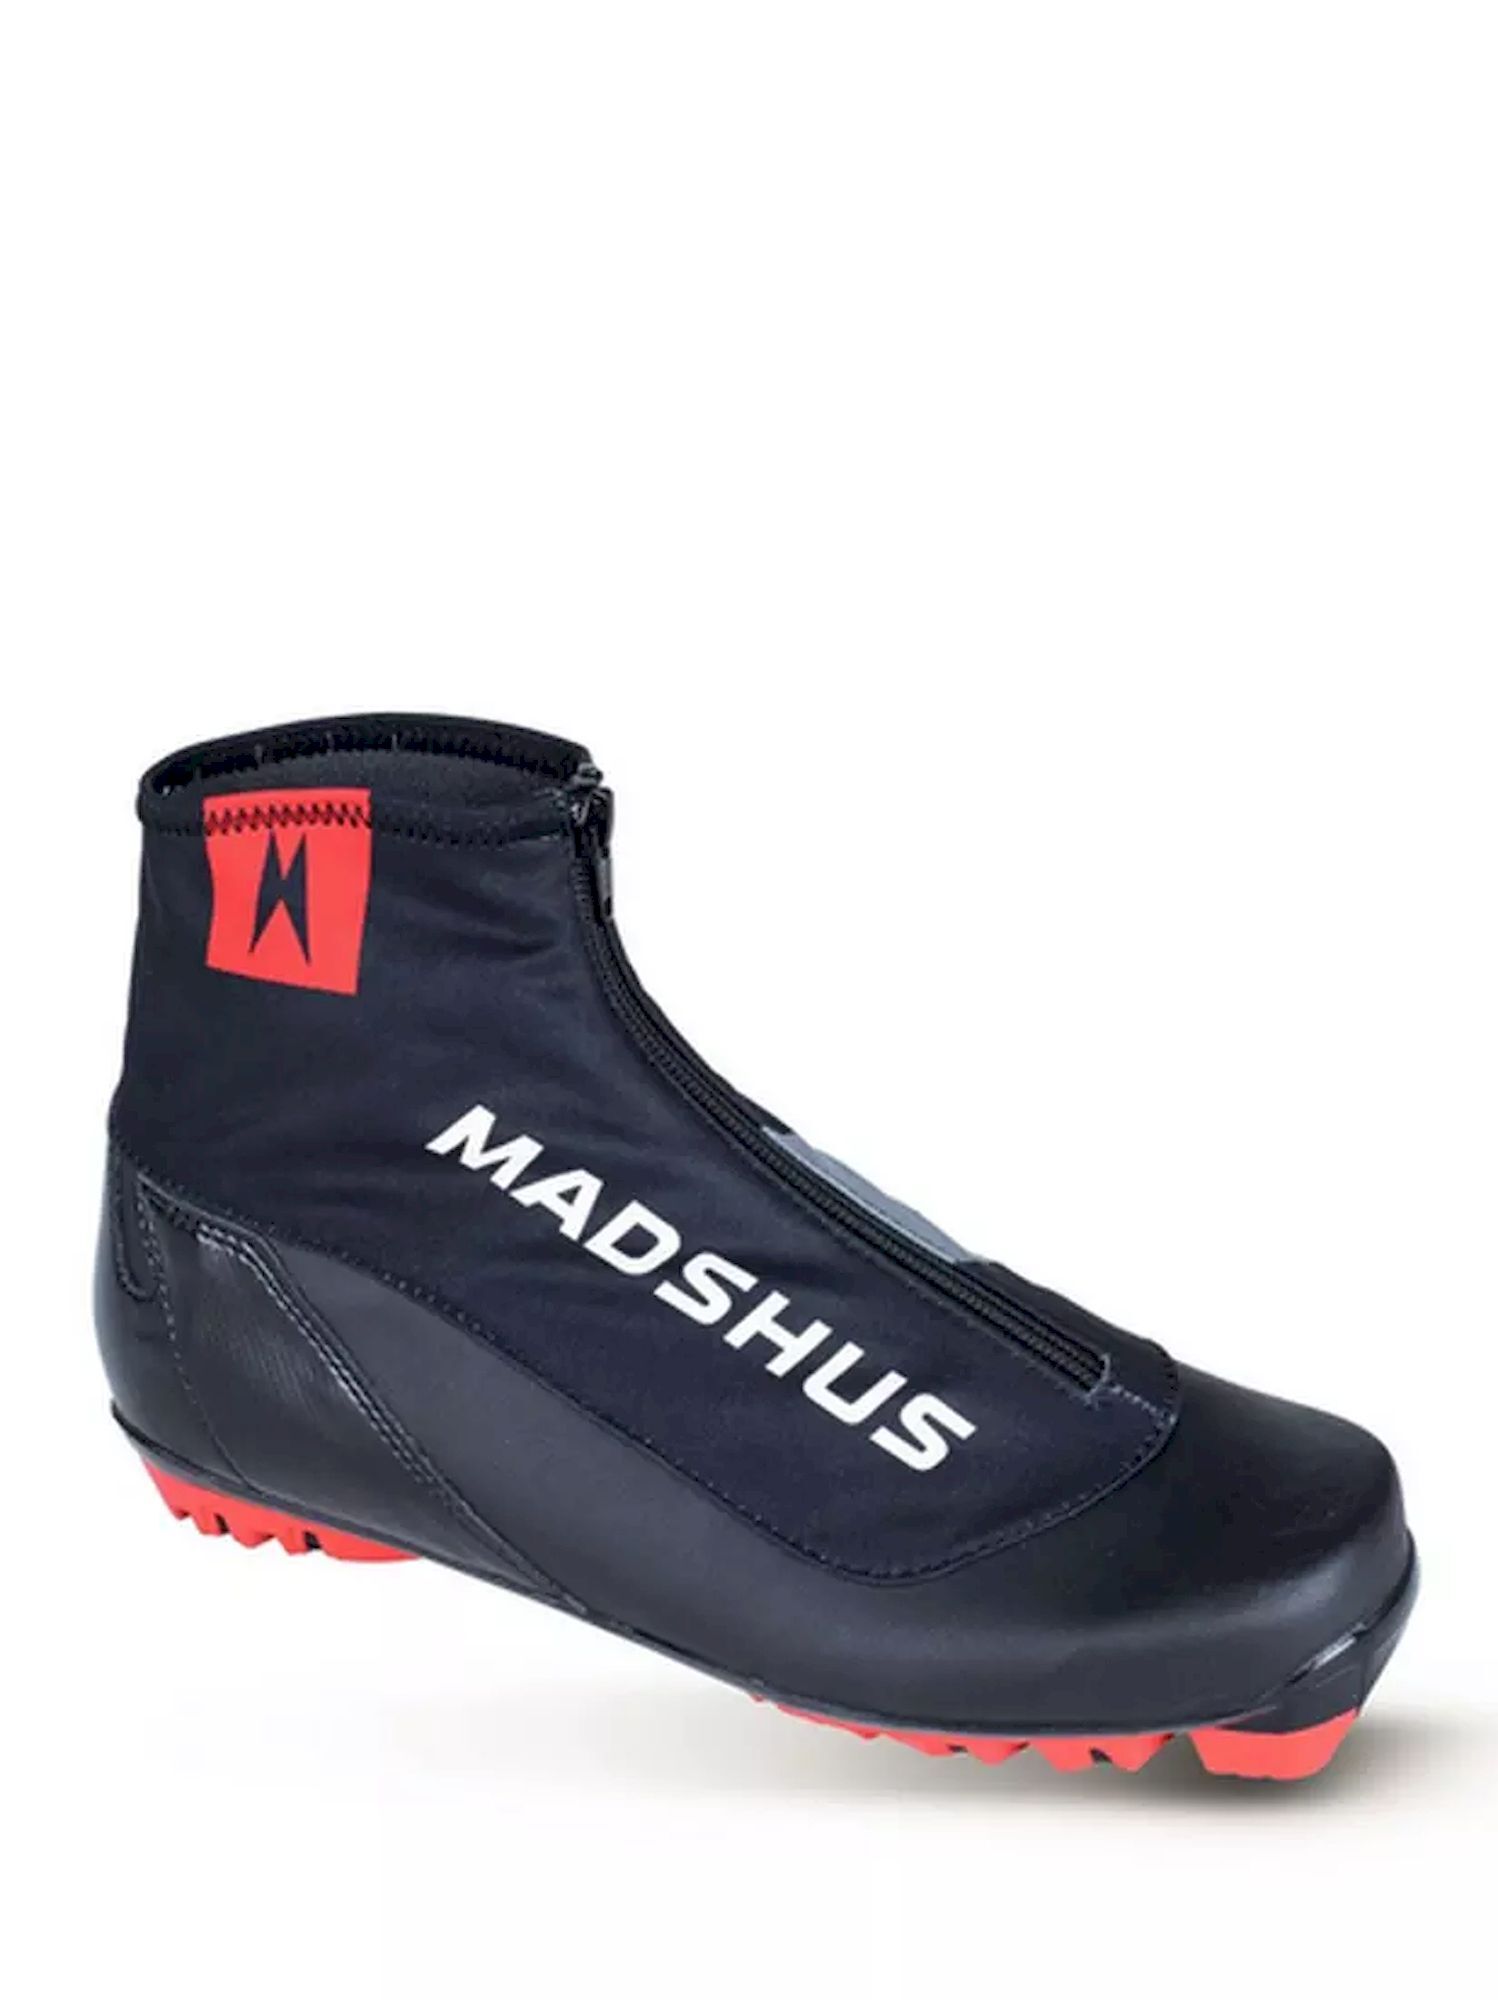 Madshus Endurace Classic - Cross-country ski boots | Hardloop